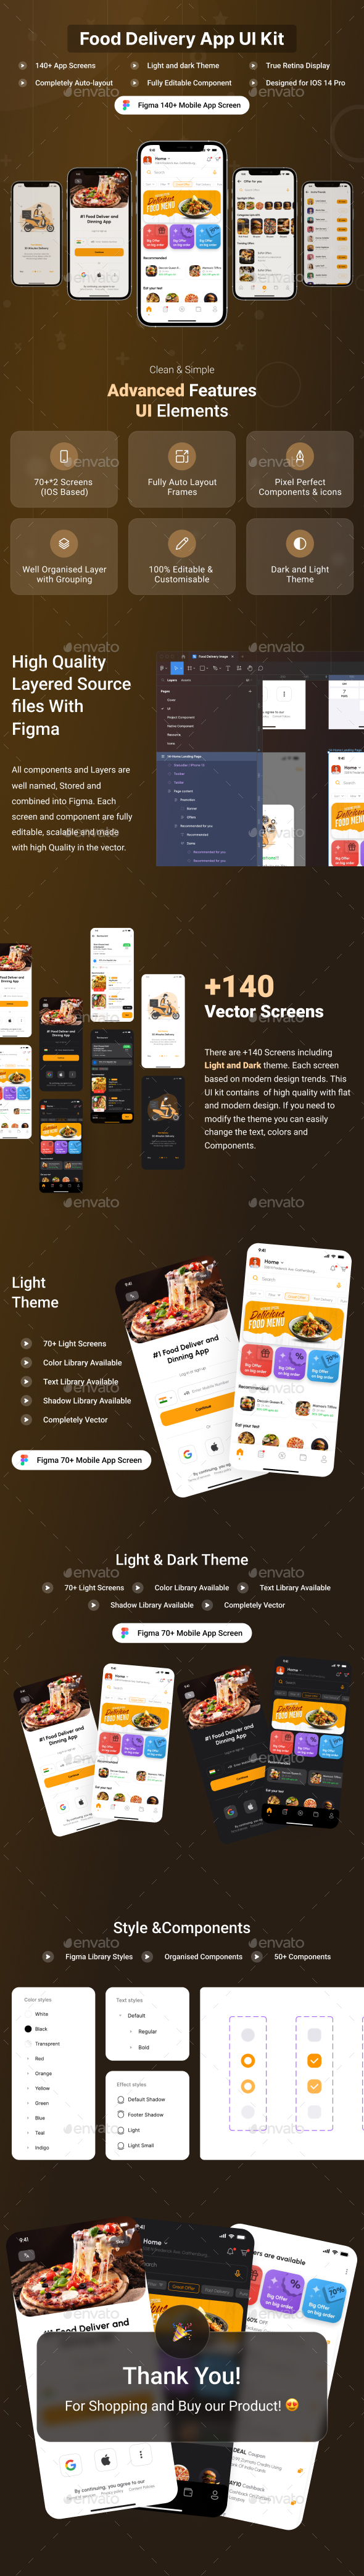 Nourish Food Delivery Mobile App UI Kit